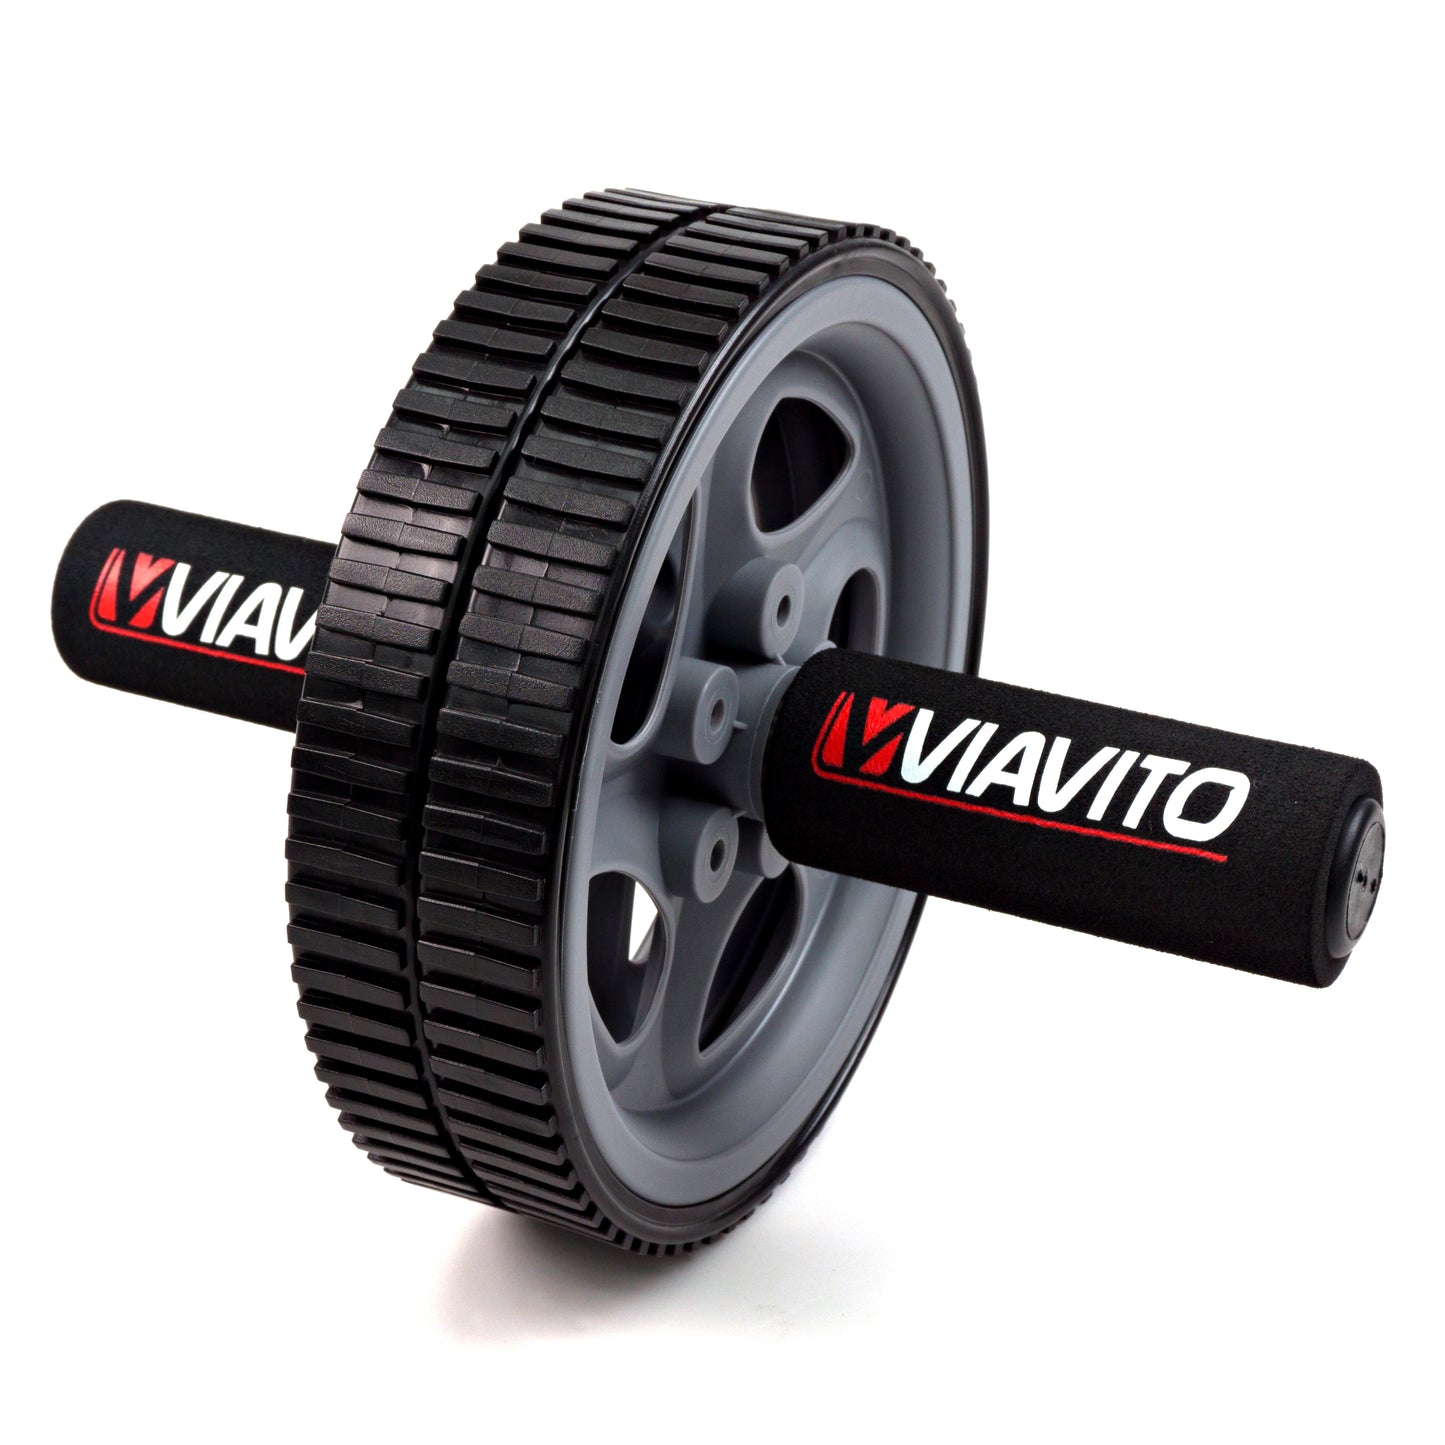 |Viavito Ab Exercise Wheel - Main|